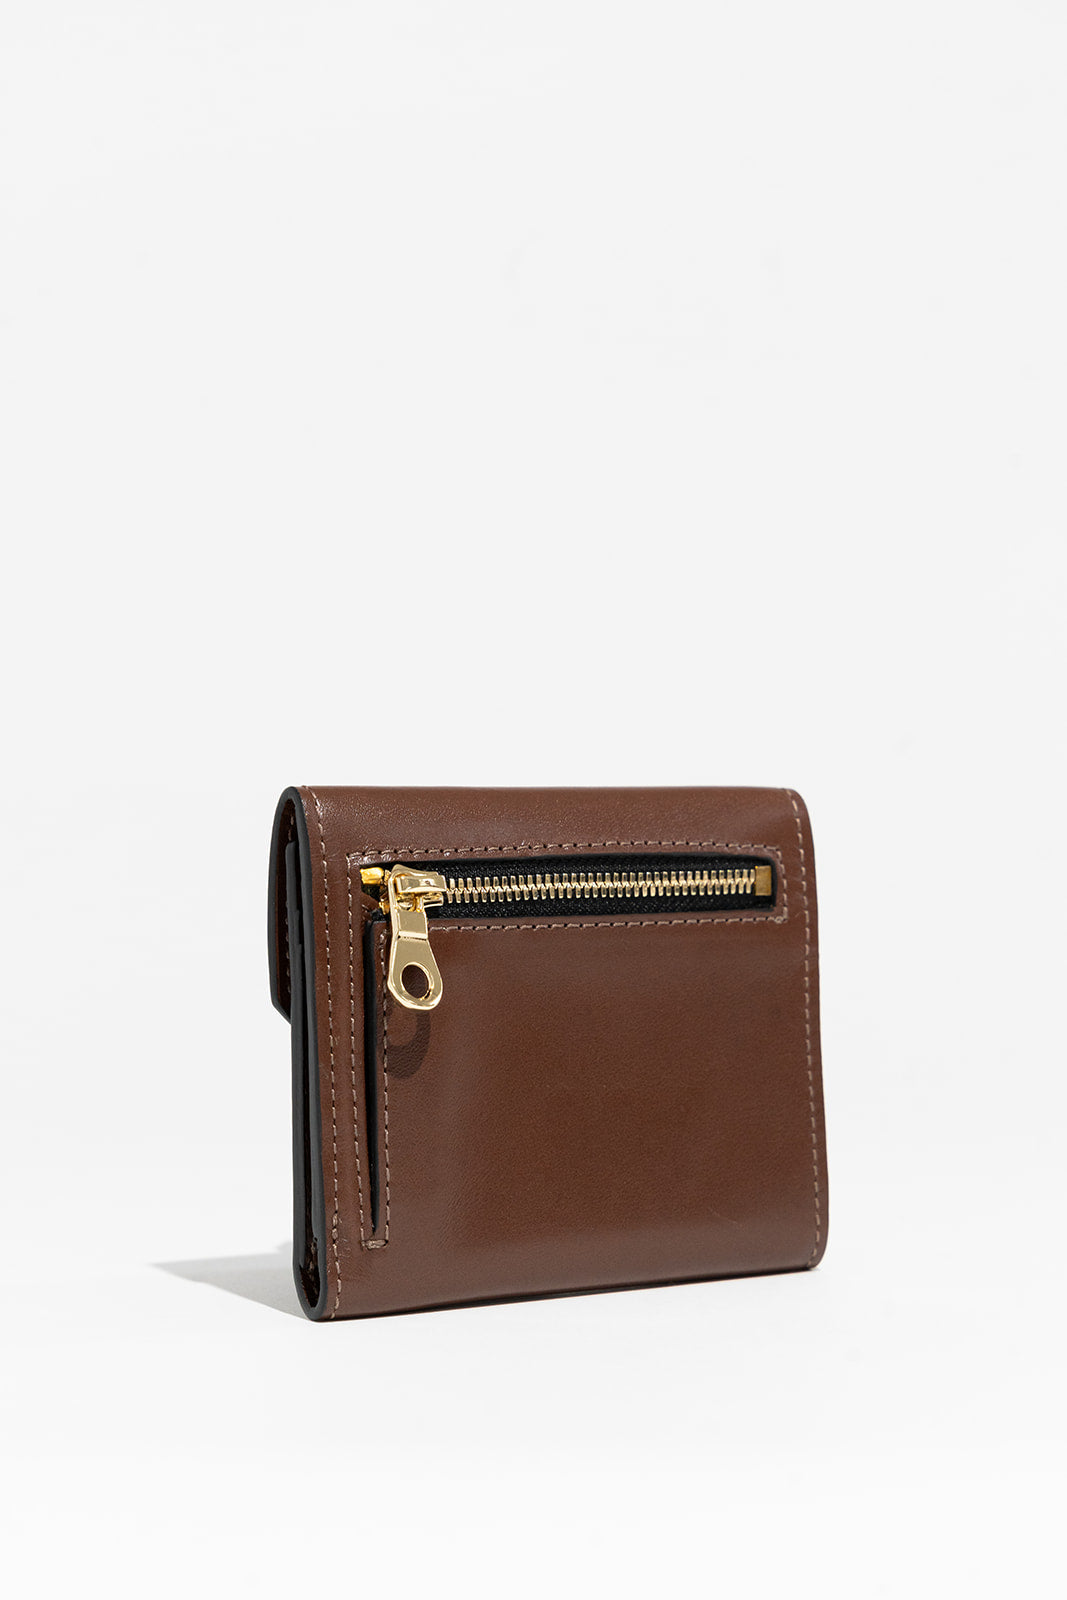 1964 Mini Wallet | Premium Brown Leather